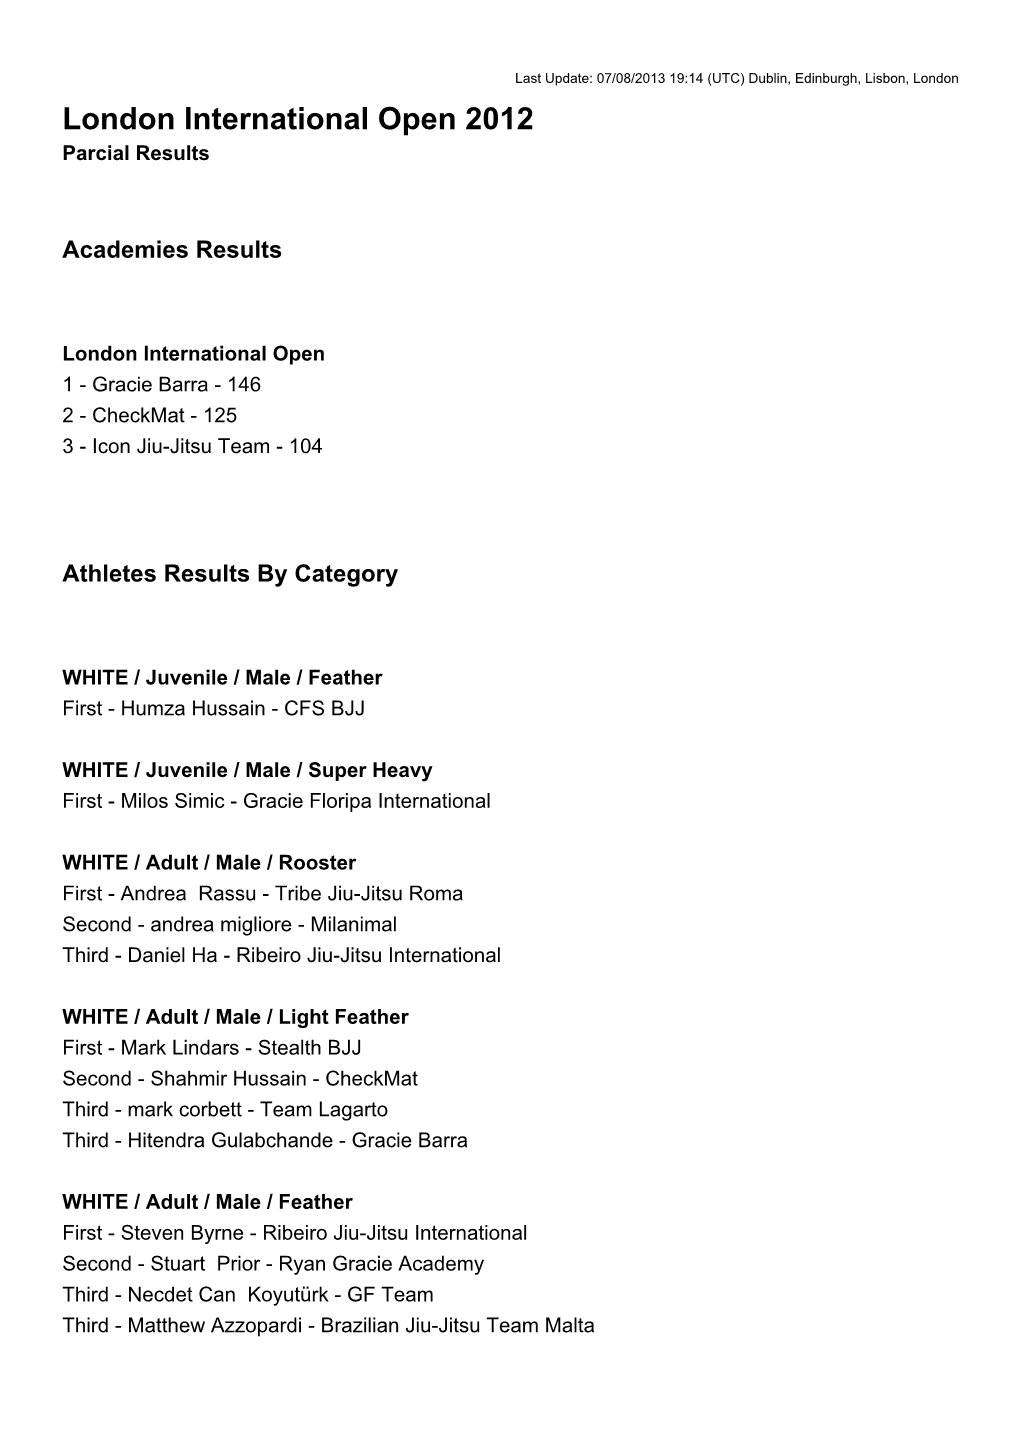 London International Open 2012 Parcial Results